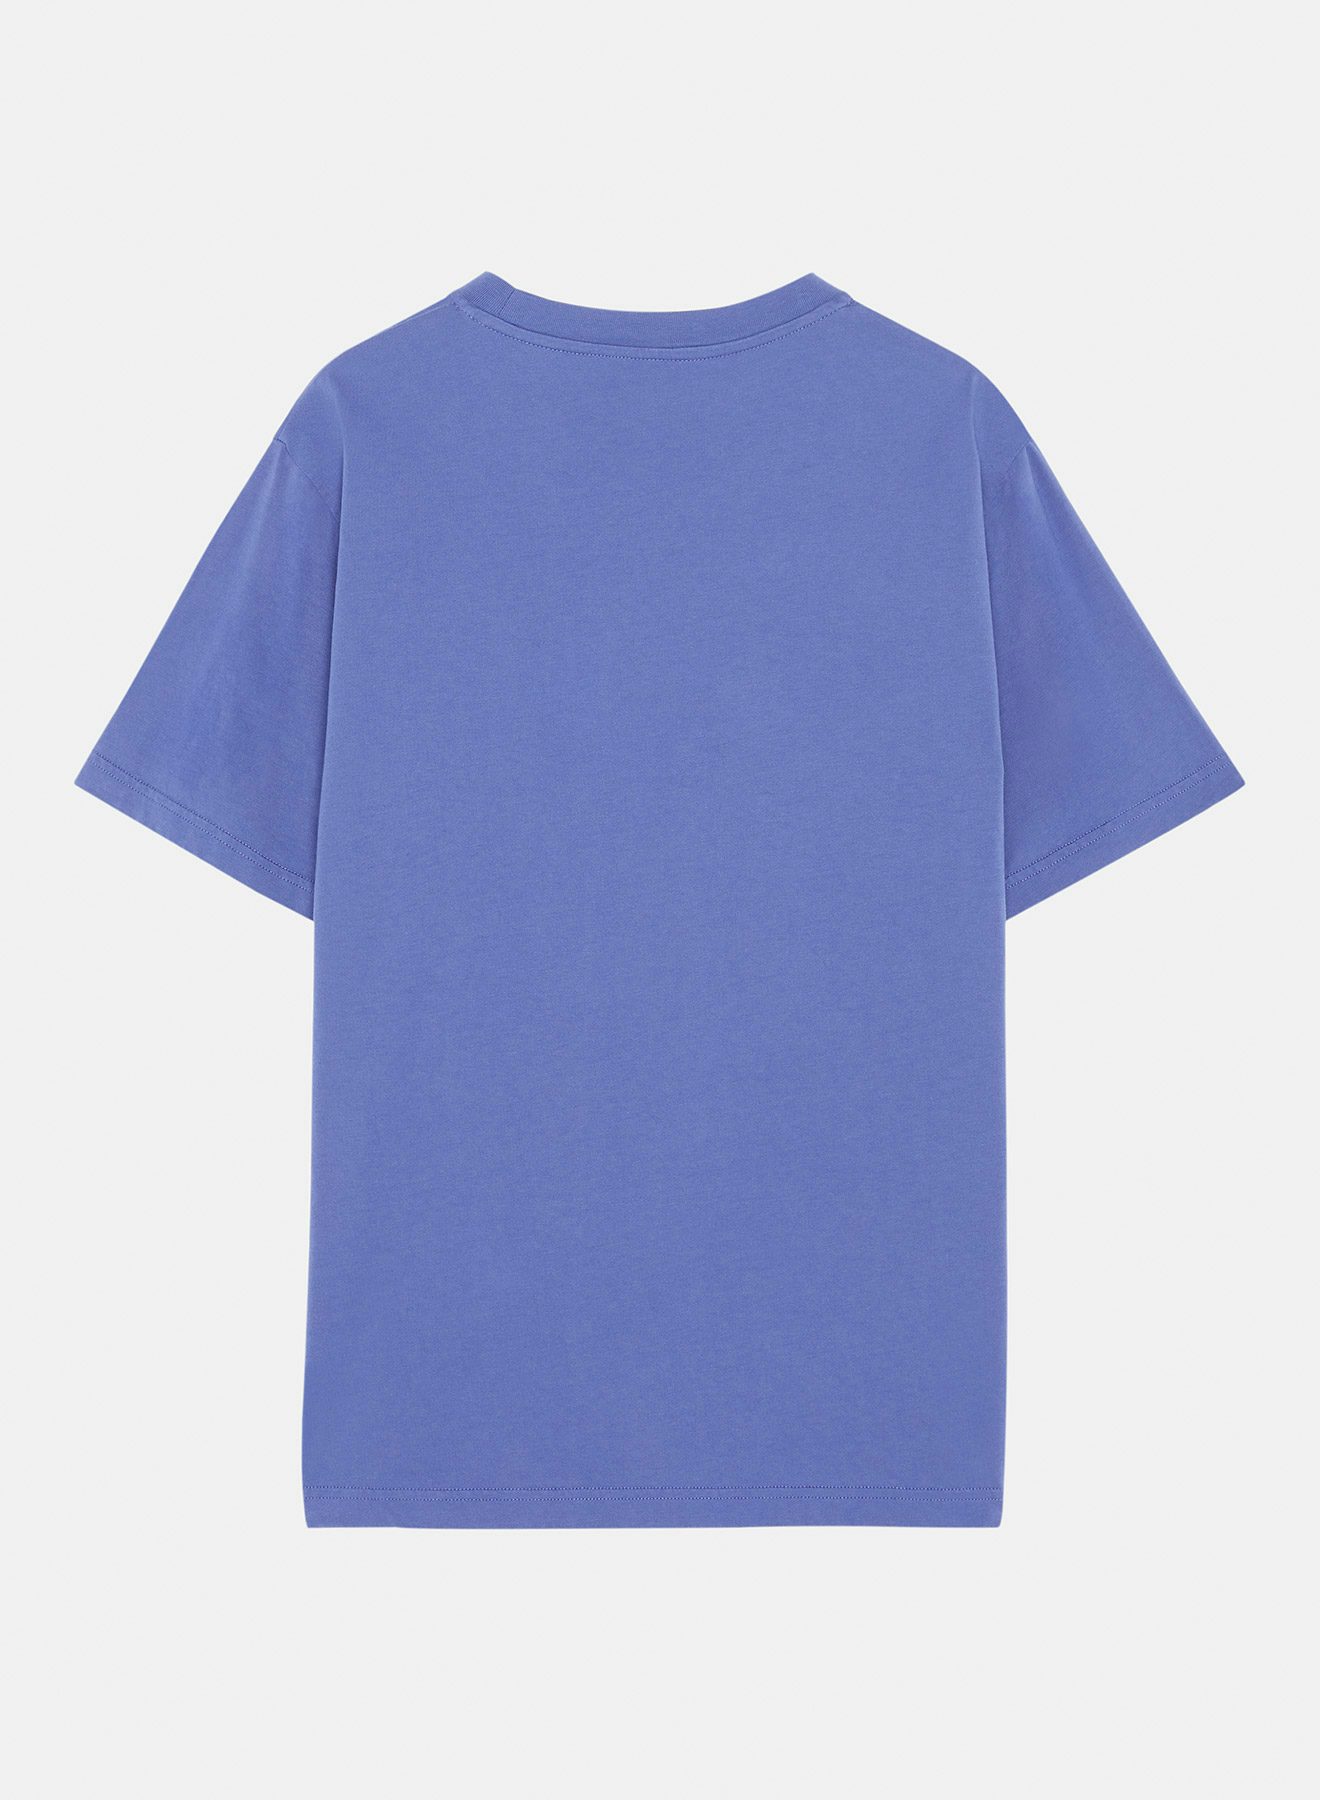 Cotton jersey t-shirt klein blue - Nina Ricci